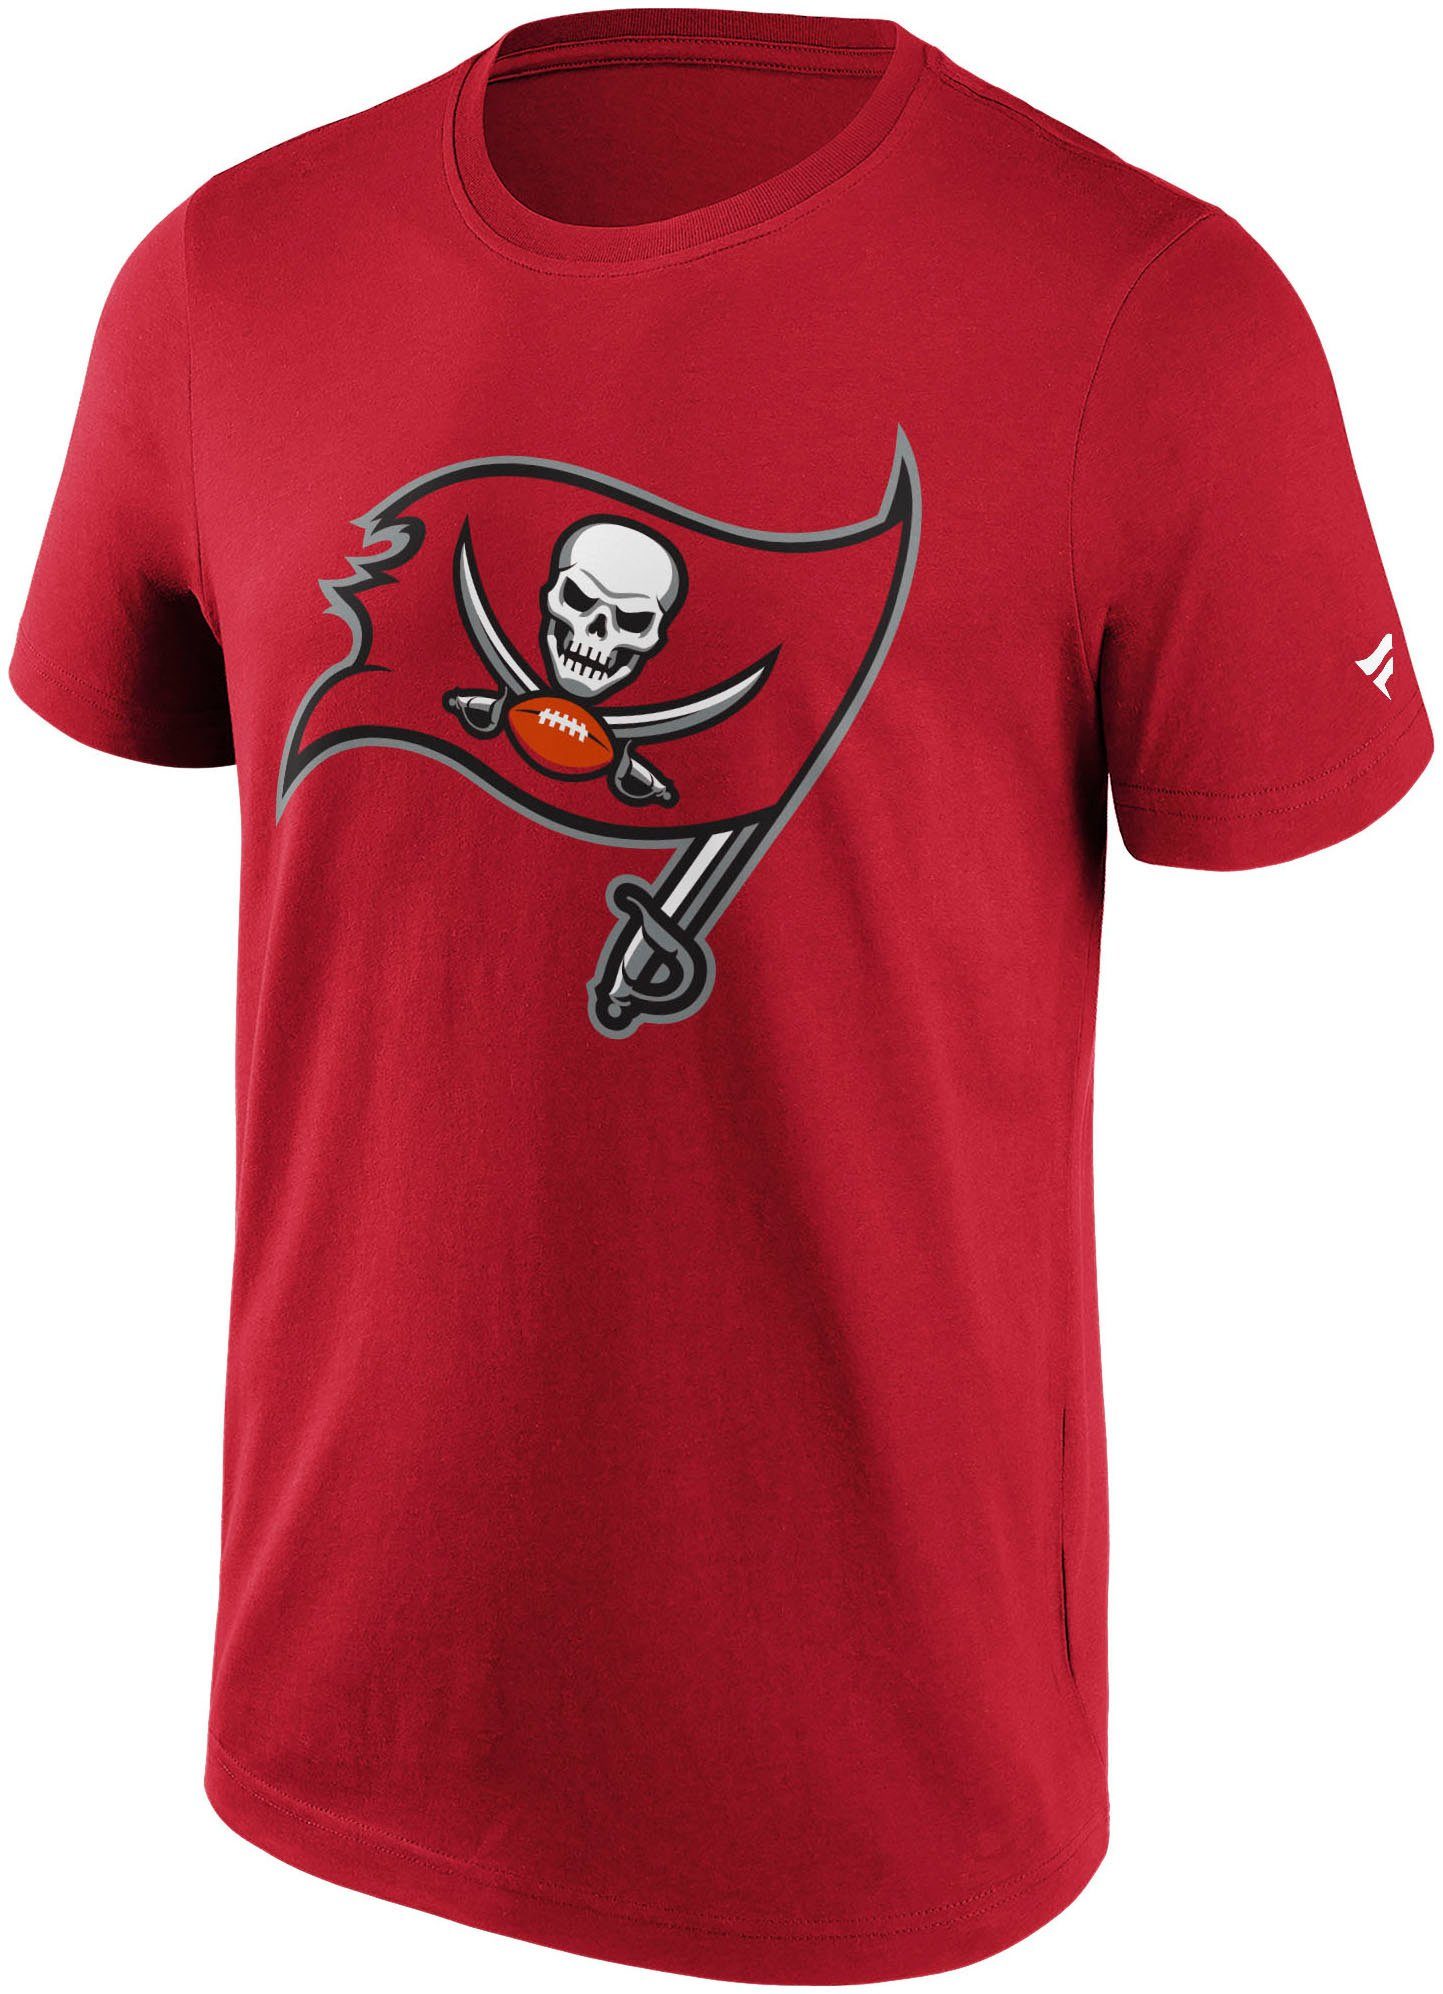 T-SHIRT LOGO GRAPHIC Fanatics BUCCANEERS TAMPA T-Shirt NFL BAY PRIMARY